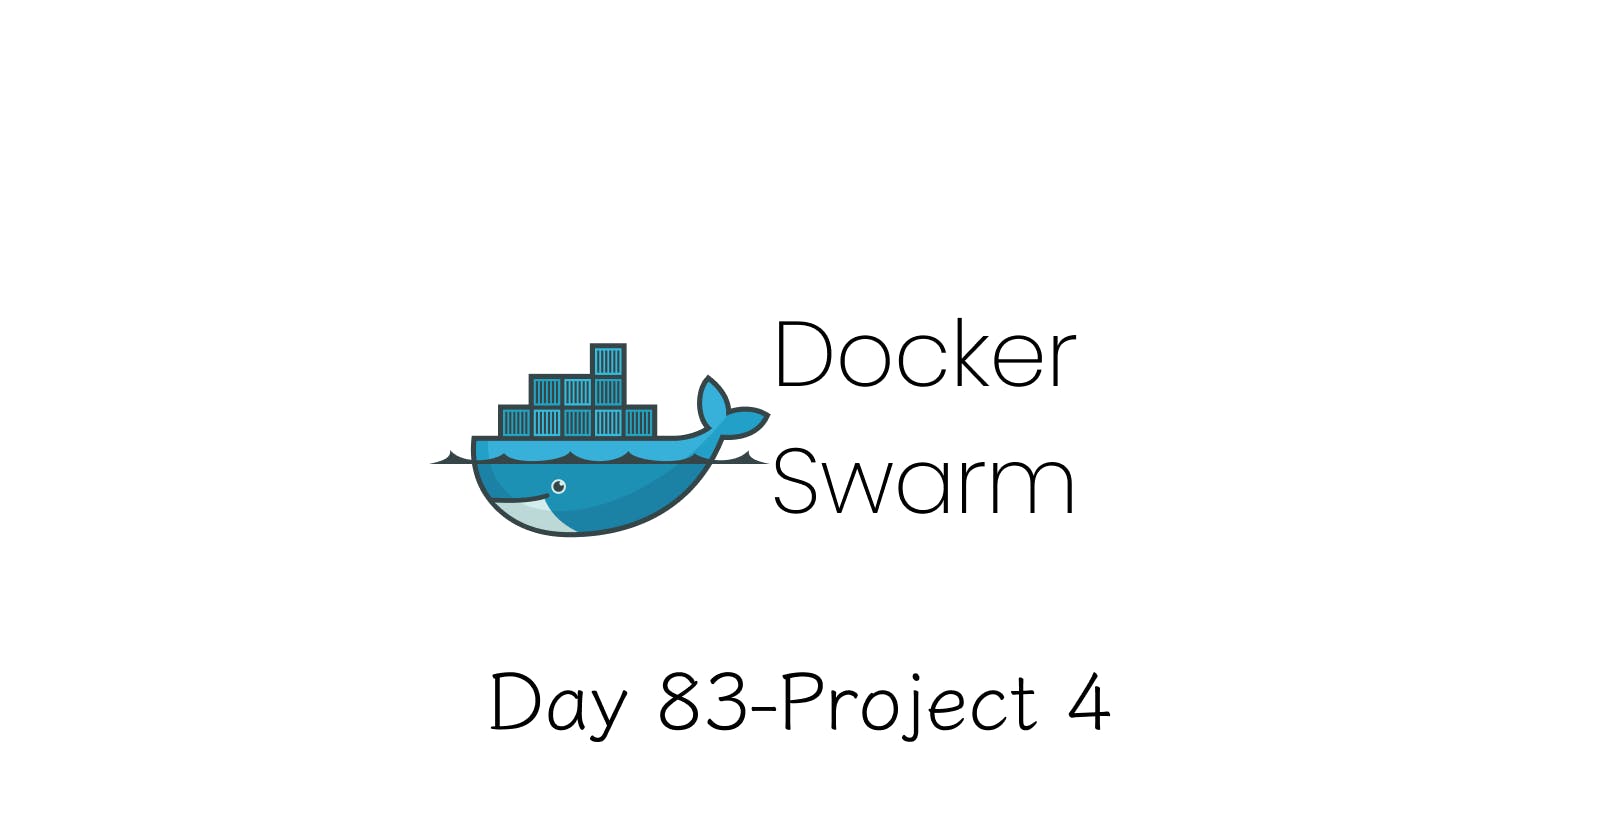 Day 83- Project 4(Docker Swarm)